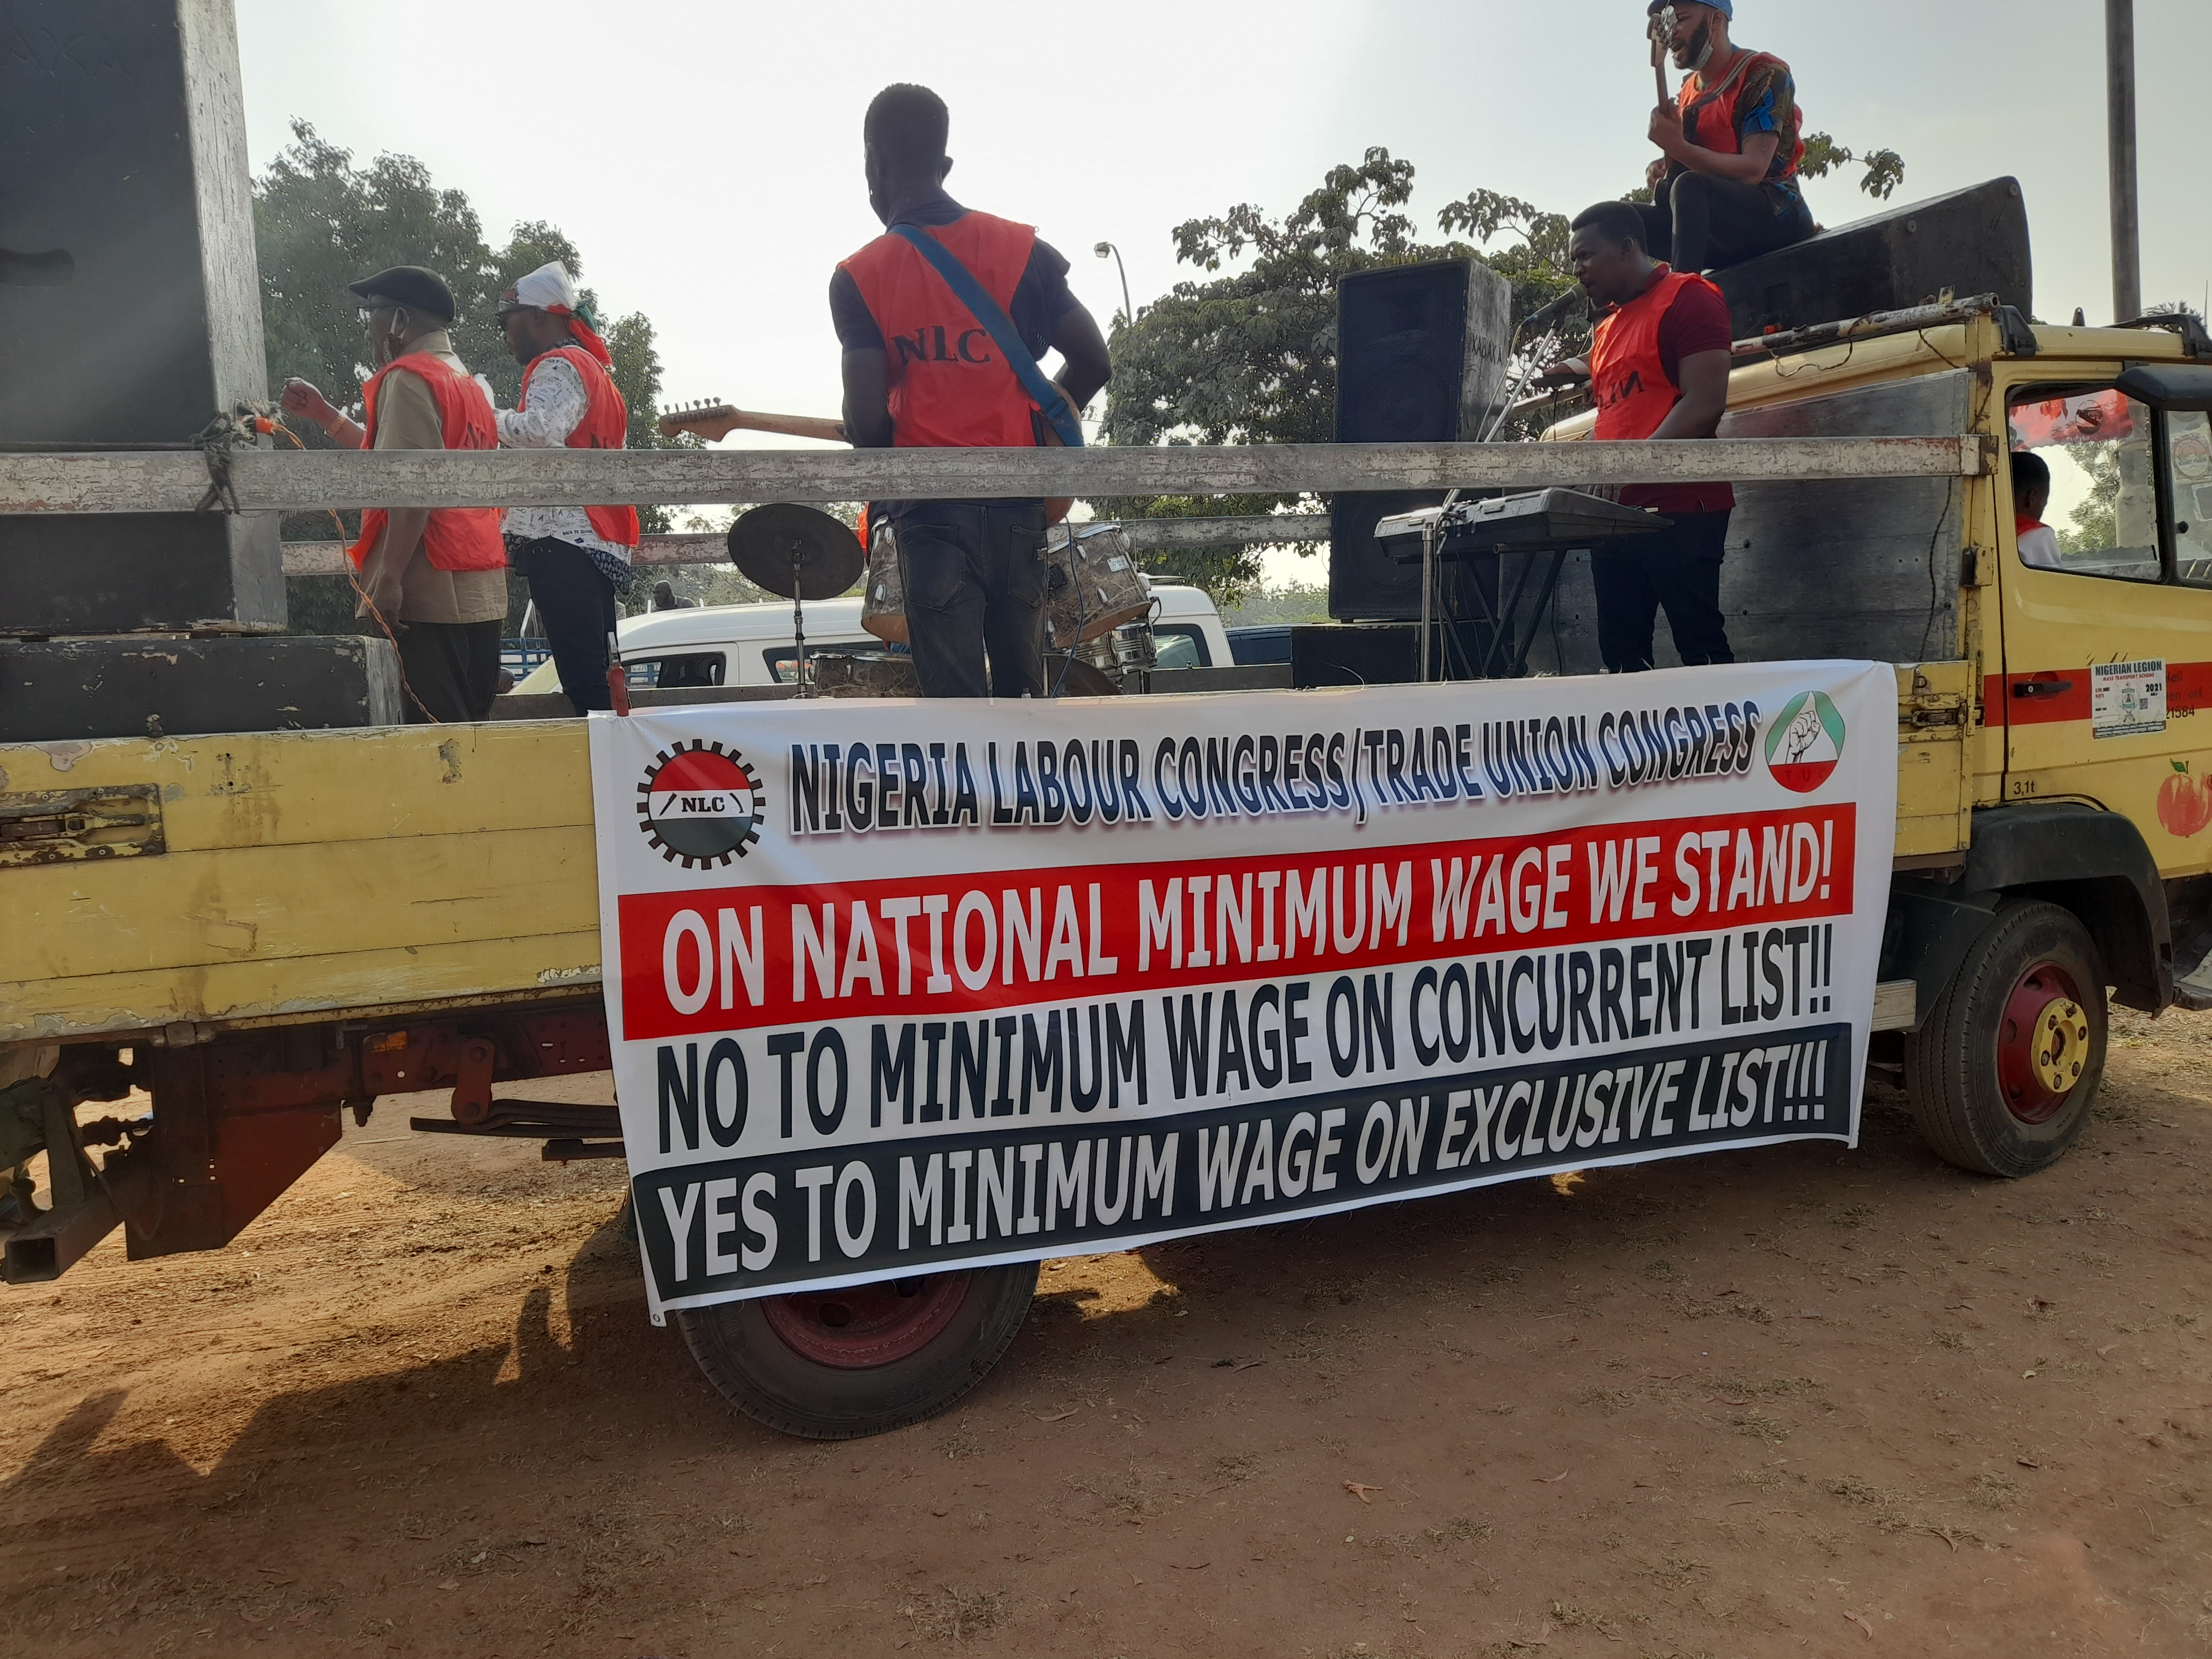 NLC Minimum wage protest